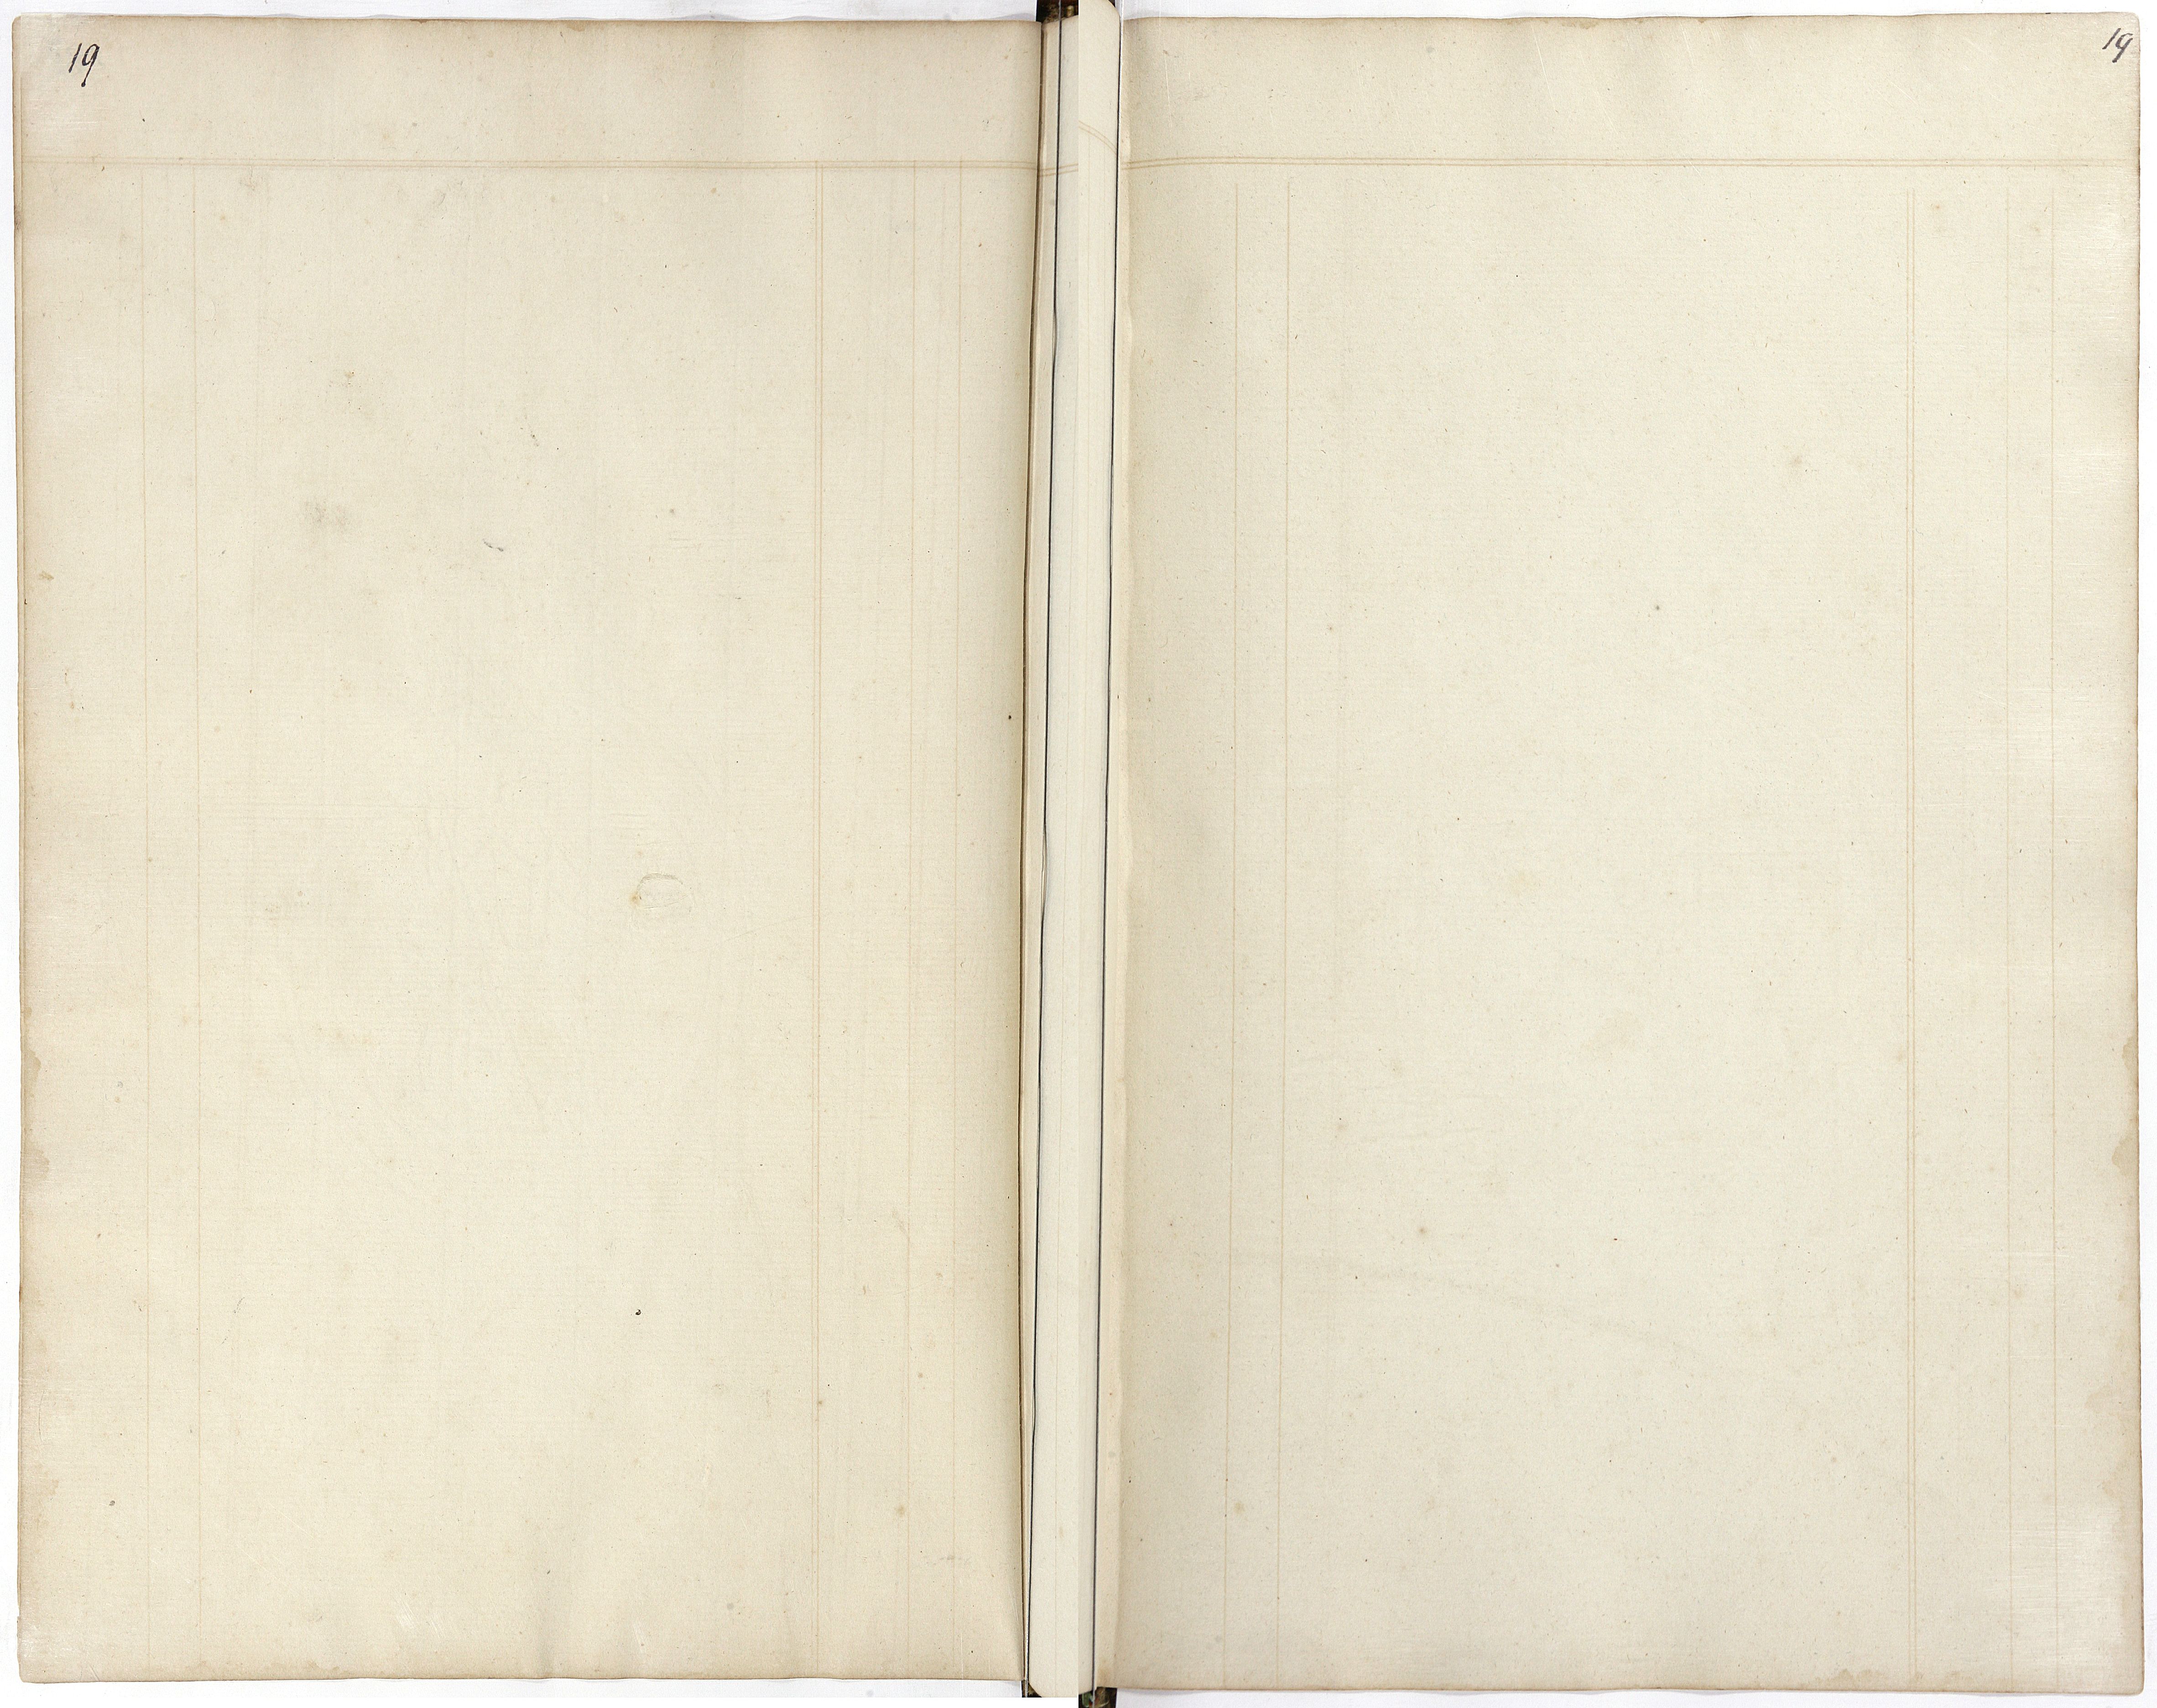 Image of Folio 19 (transcription below)